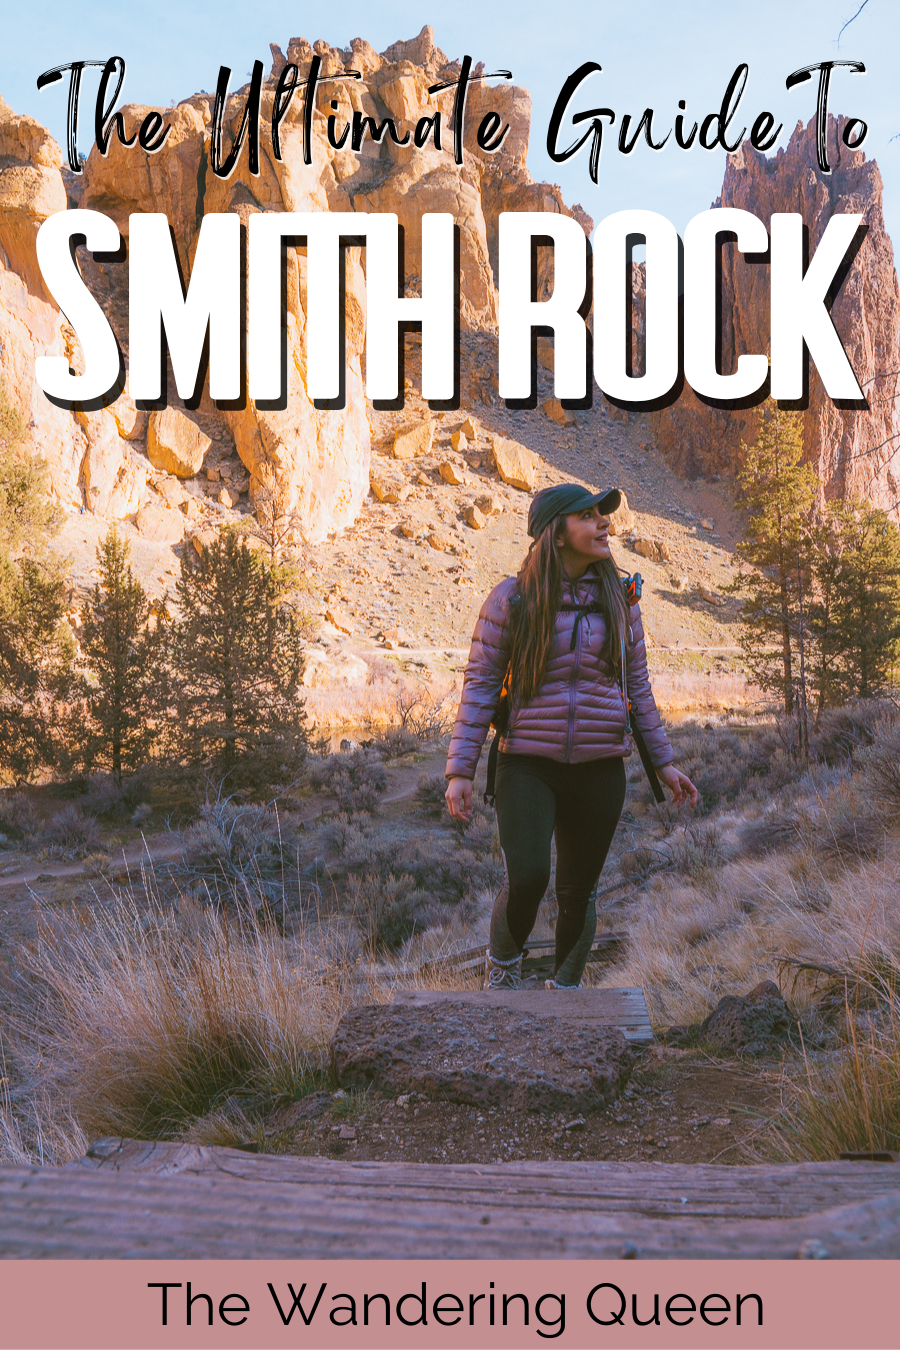 Smith Rock Hiking